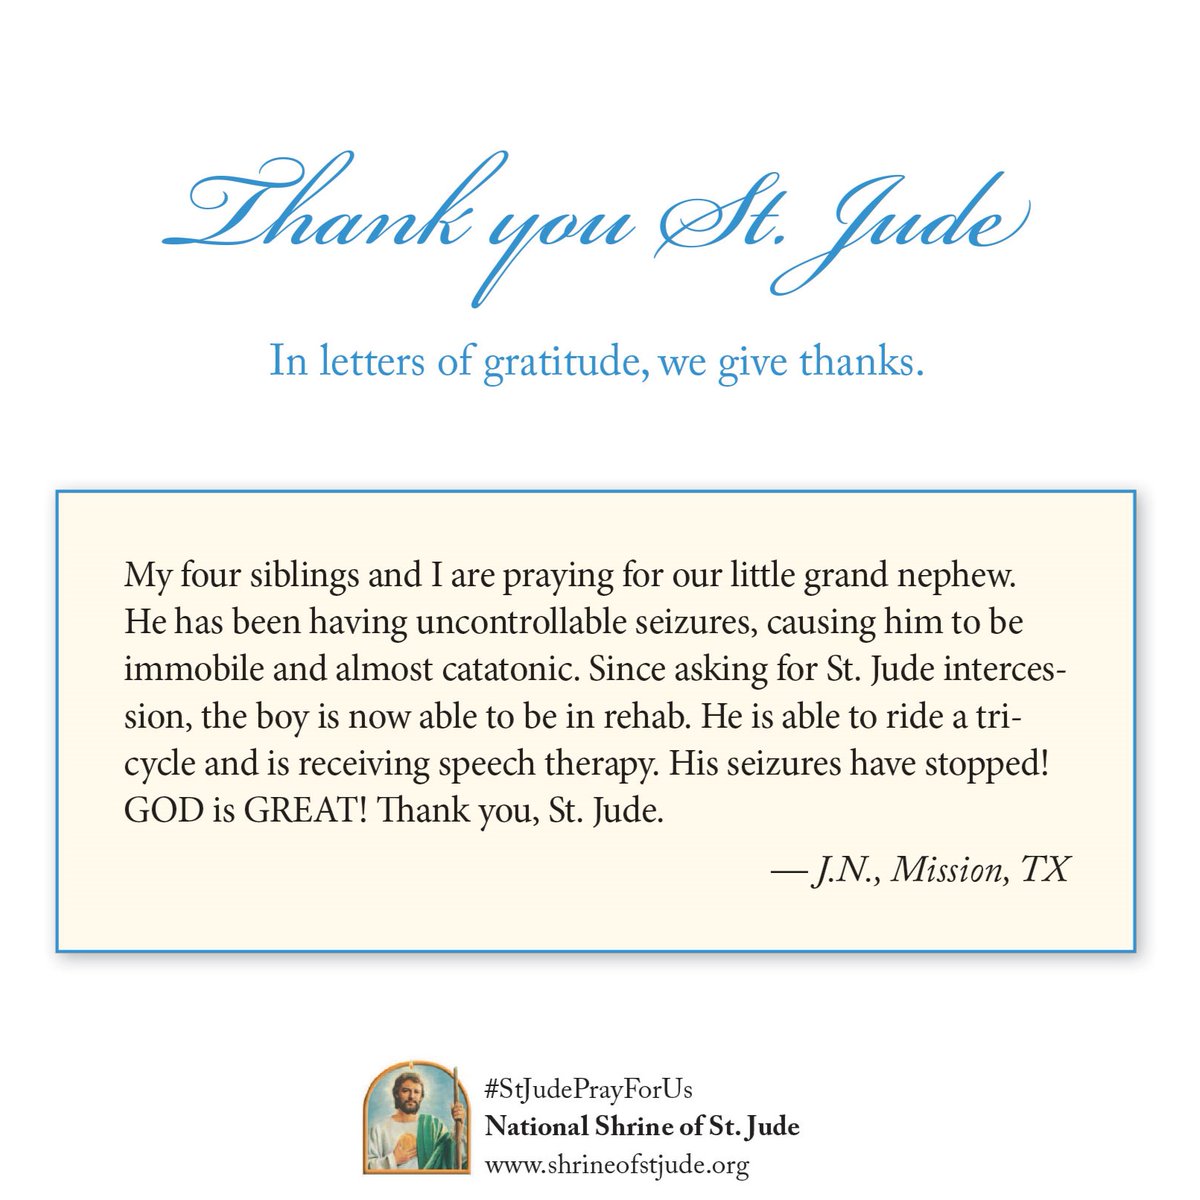 In letters of gratitude, we give thanks.

'GOD is GREAT! Thank you, St. Jude.'
— J.N., Mission, TX

-

#StJude #LettersofGratitude #StJudePrayforUs